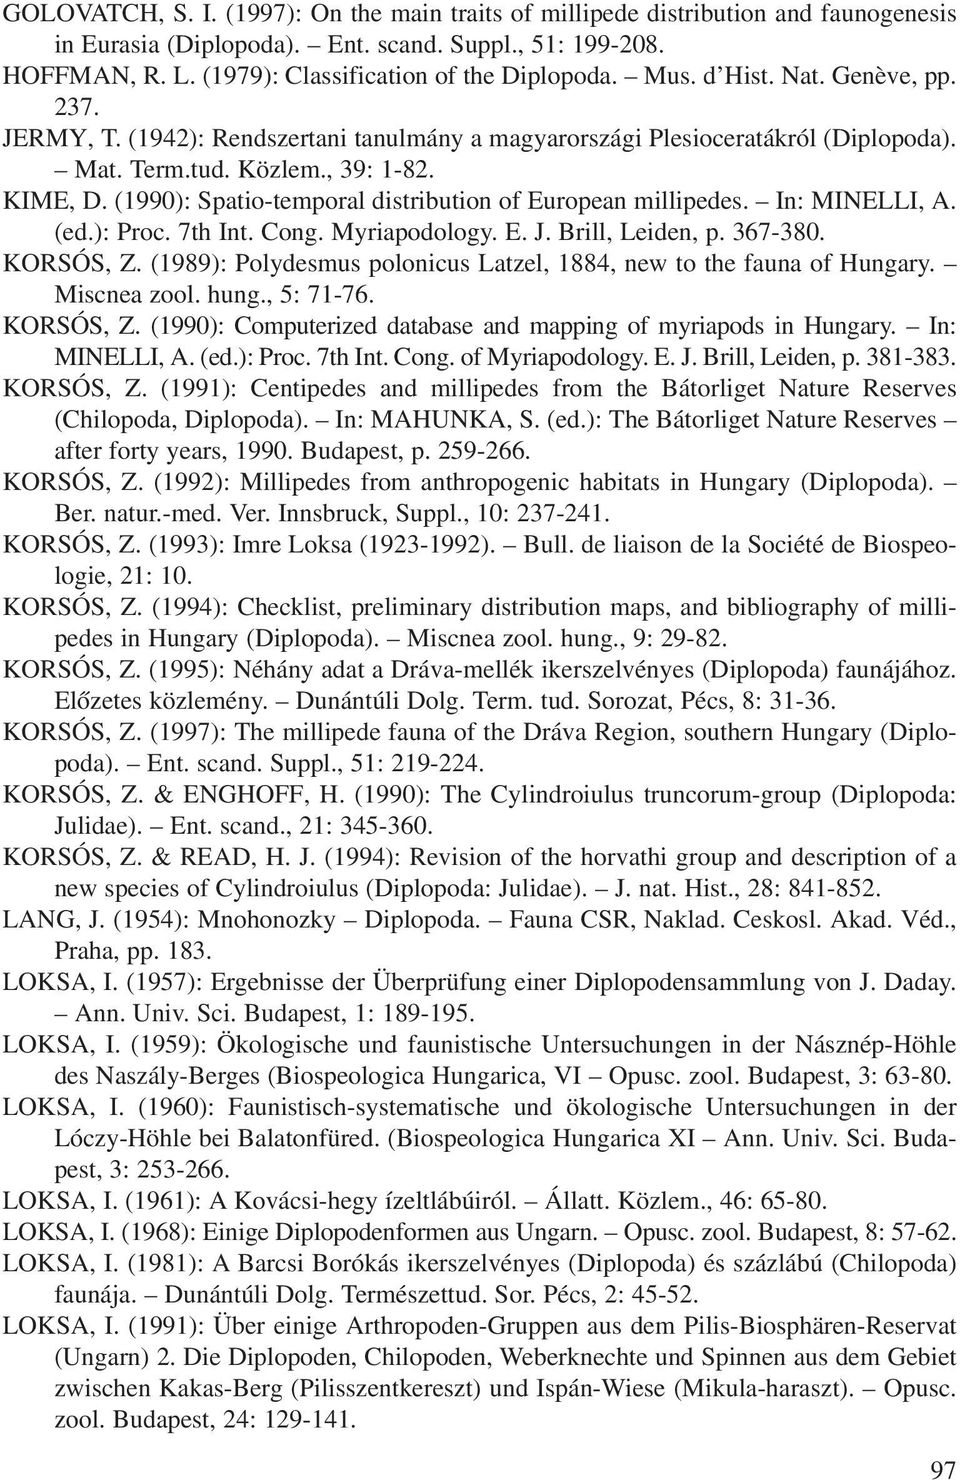 (1990): Spatio-temporal distribution of European millipedes. In: MINELLI, A. (ed.): Proc. 7th Int. Cong. Myriapodology. E. J. Brill, Leiden, p. 367-380. KORSÓS, Z.